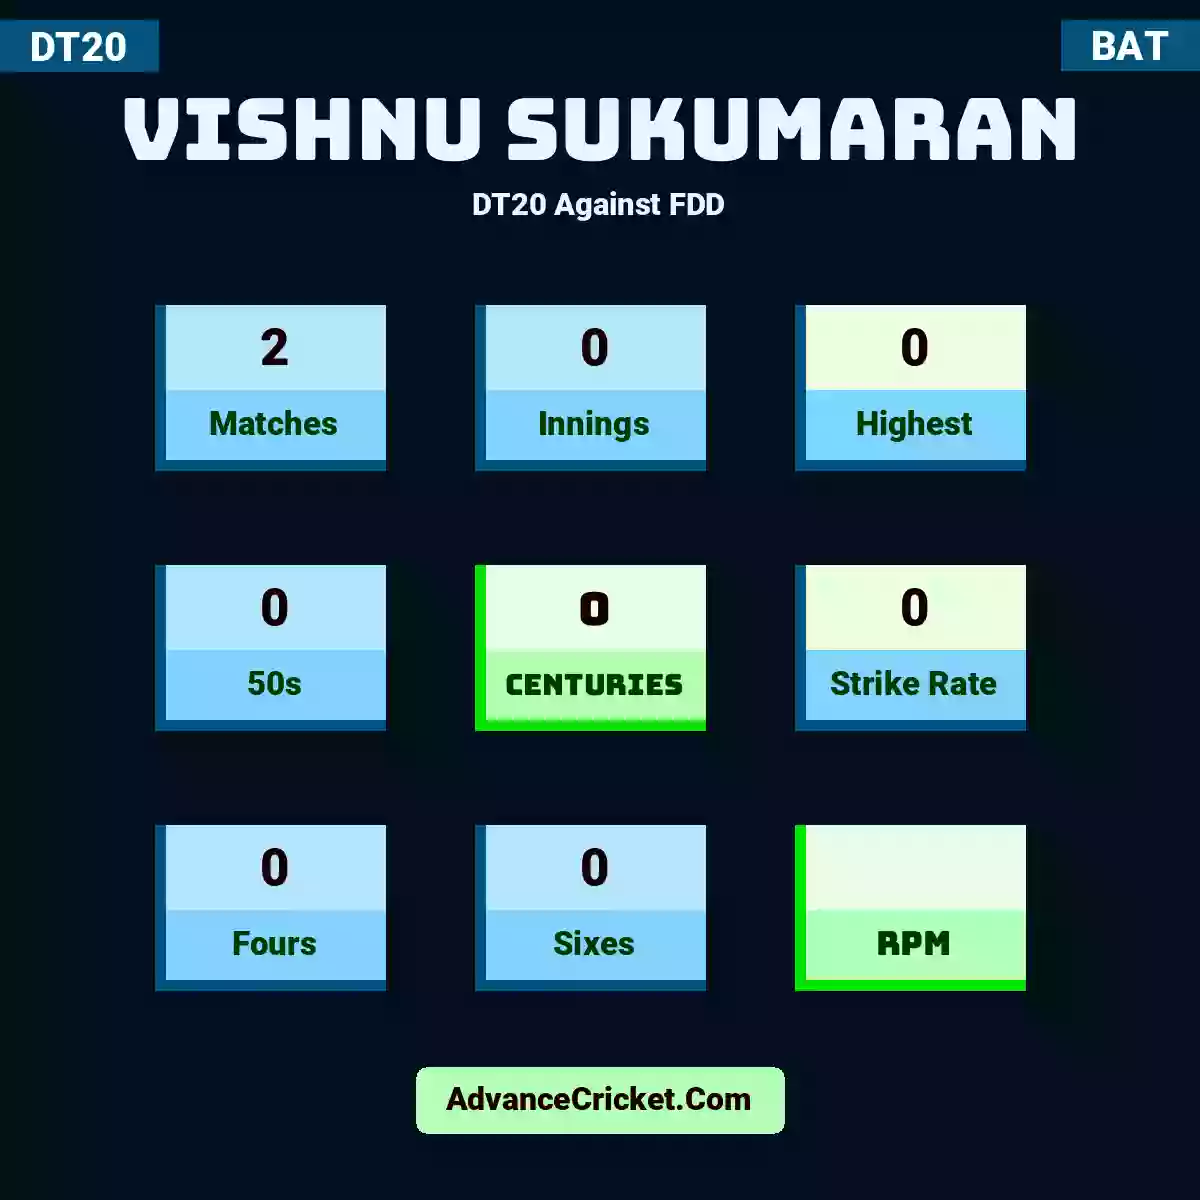 Vishnu Sukumaran DT20  Against FDD, Vishnu Sukumaran played 2 matches, scored 0 runs as highest, 0 half-centuries, and 0 centuries, with a strike rate of 0. V.Sukumaran hit 0 fours and 0 sixes.